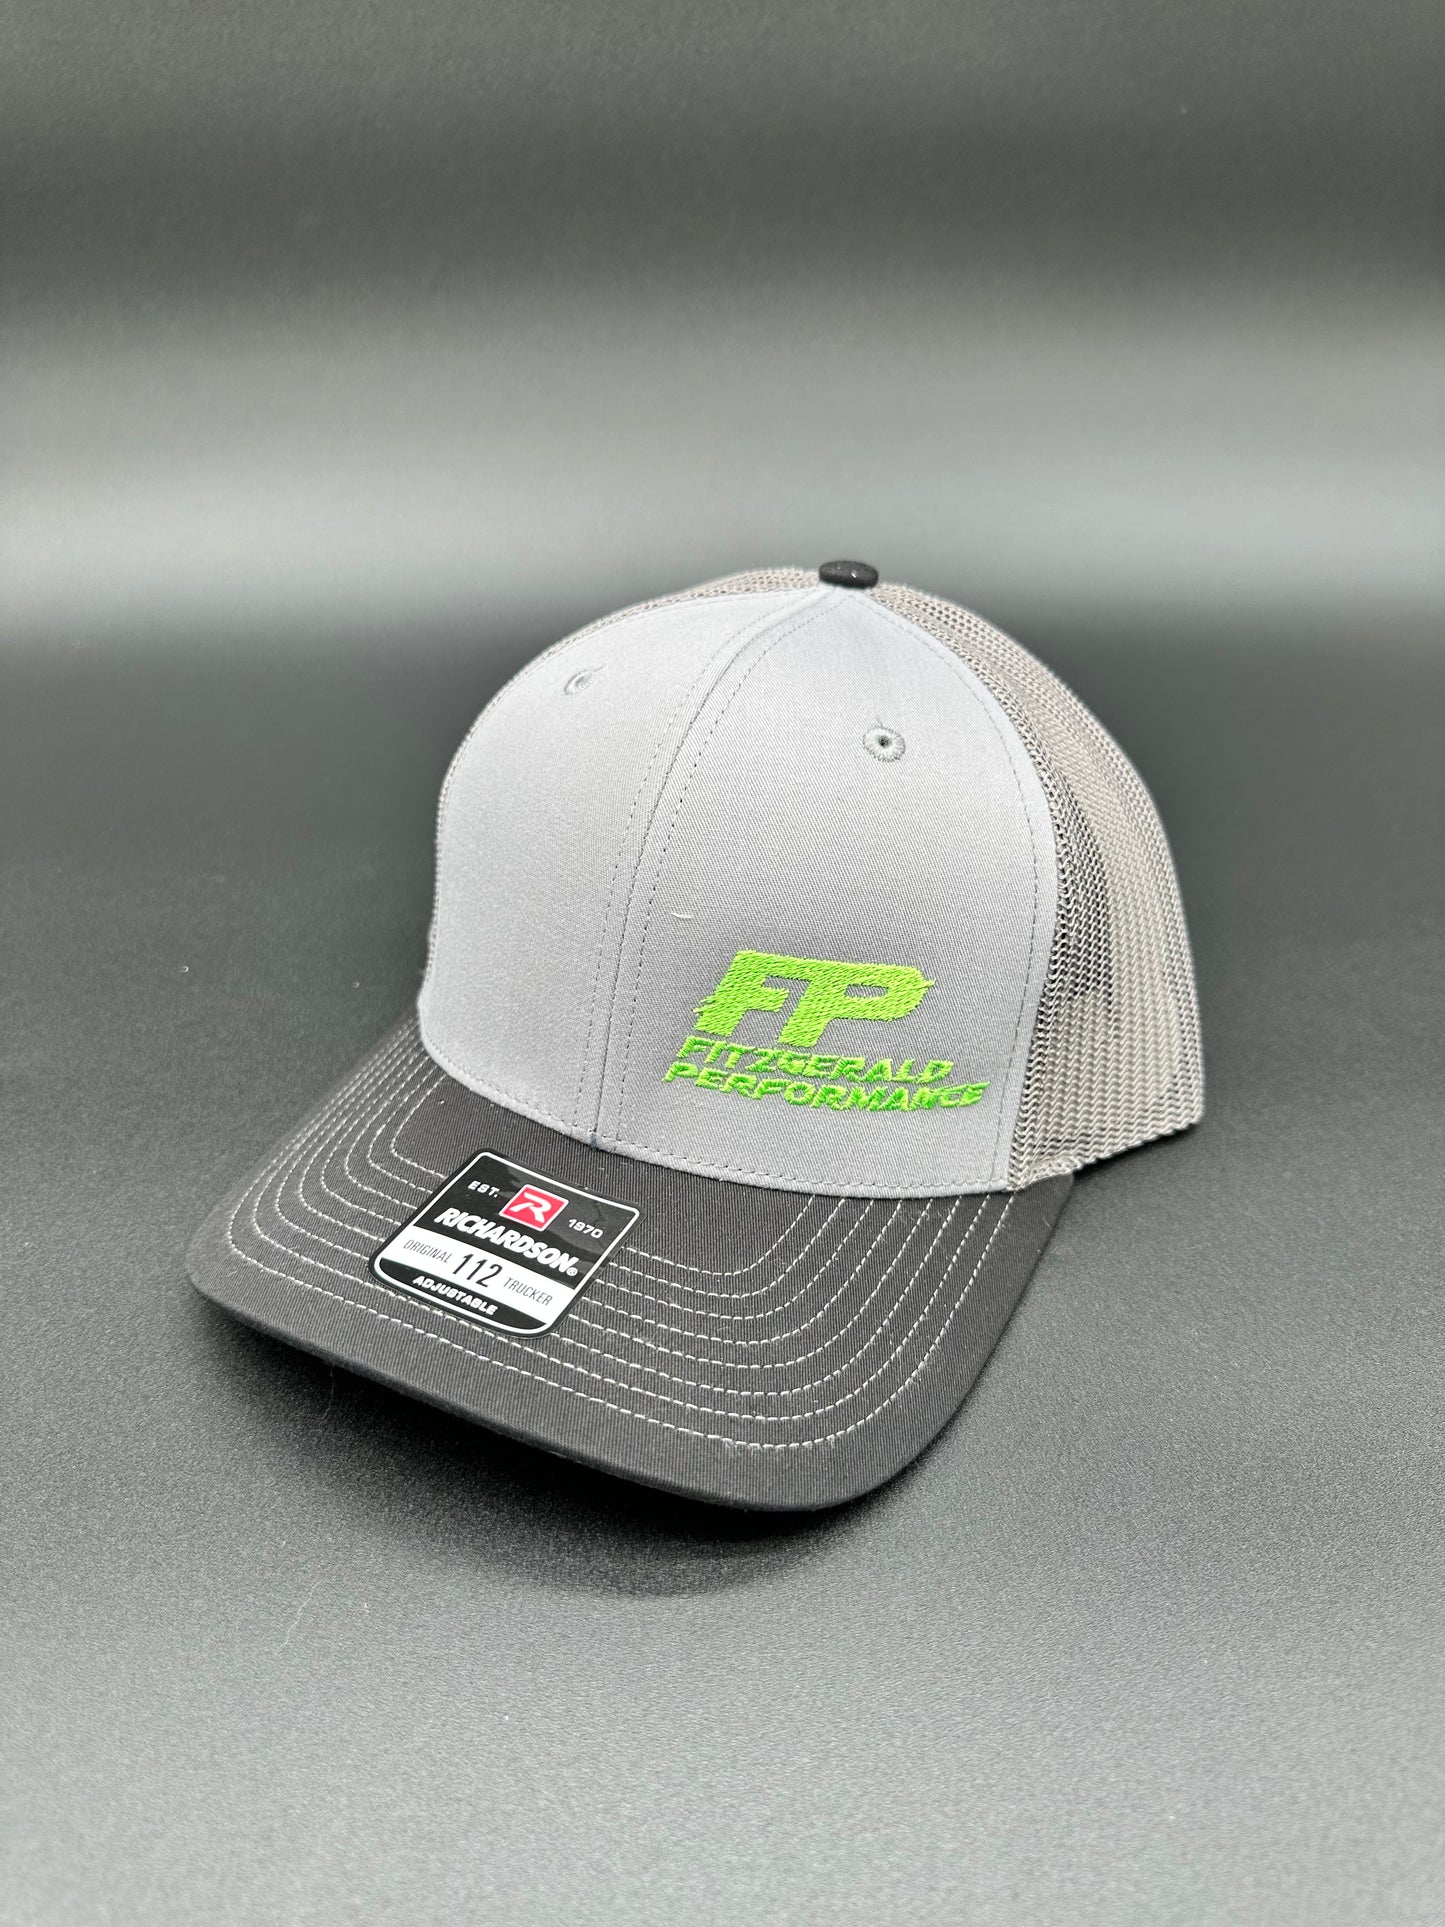 FP Hat Grey/Black (Richardson 112)